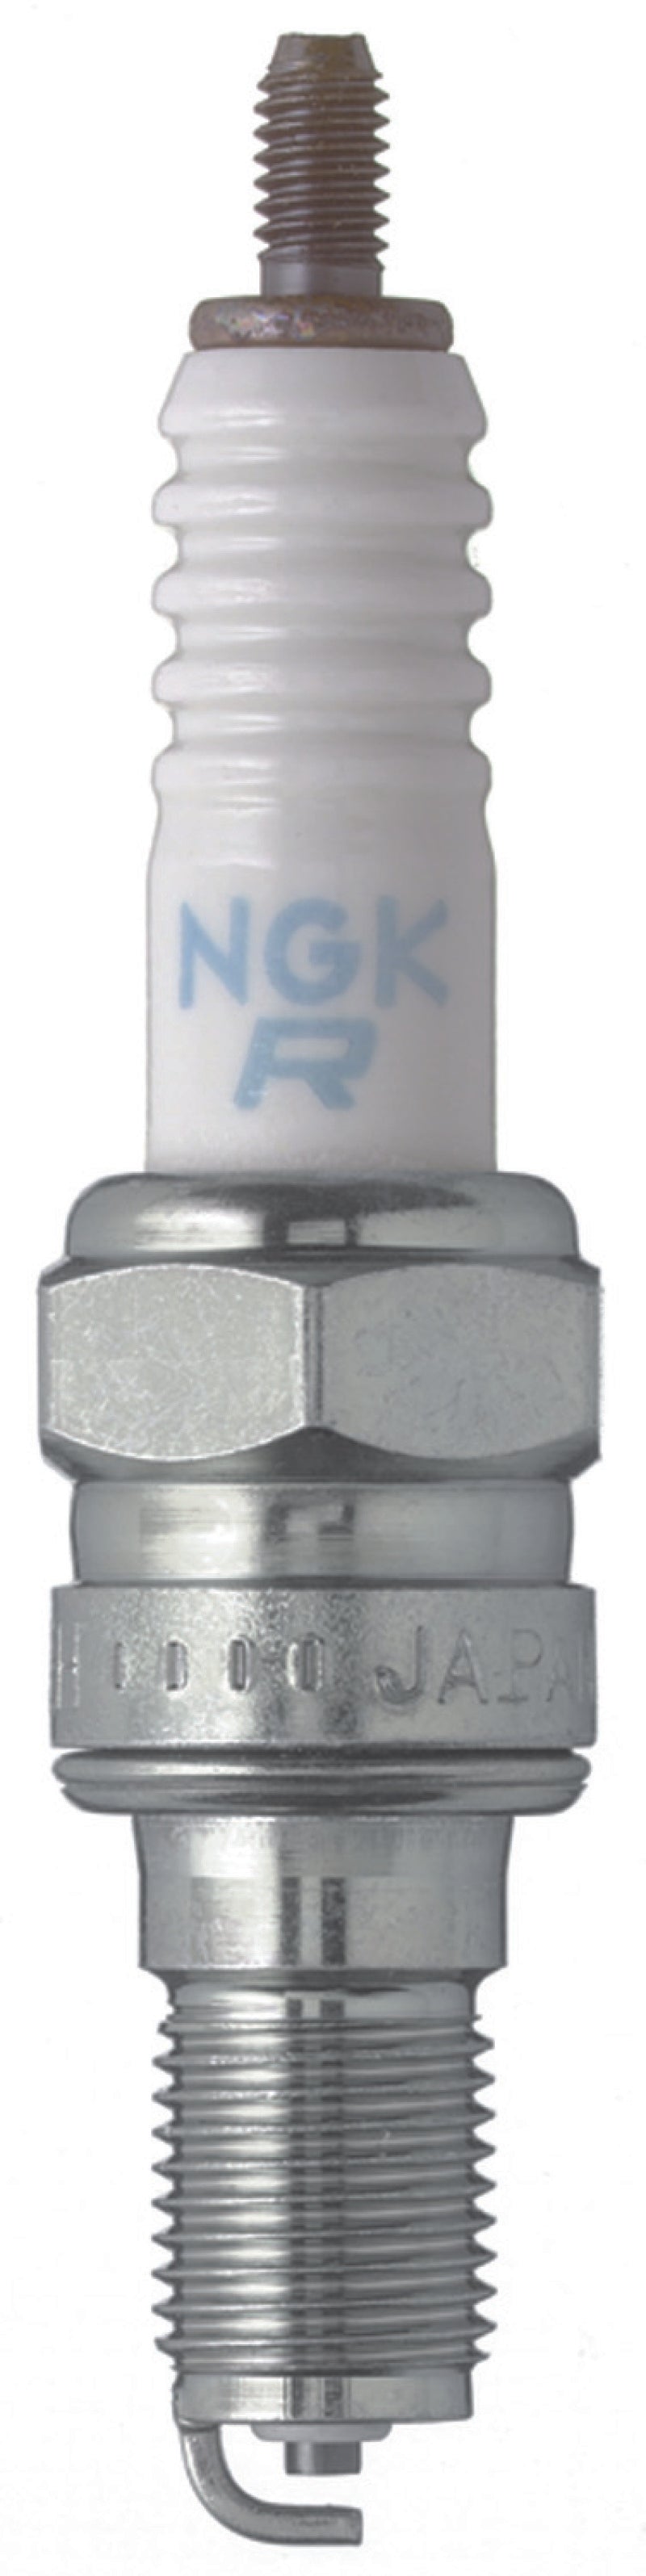 NGK Standard Spark Plug Box of 10 (CR8EH-9)